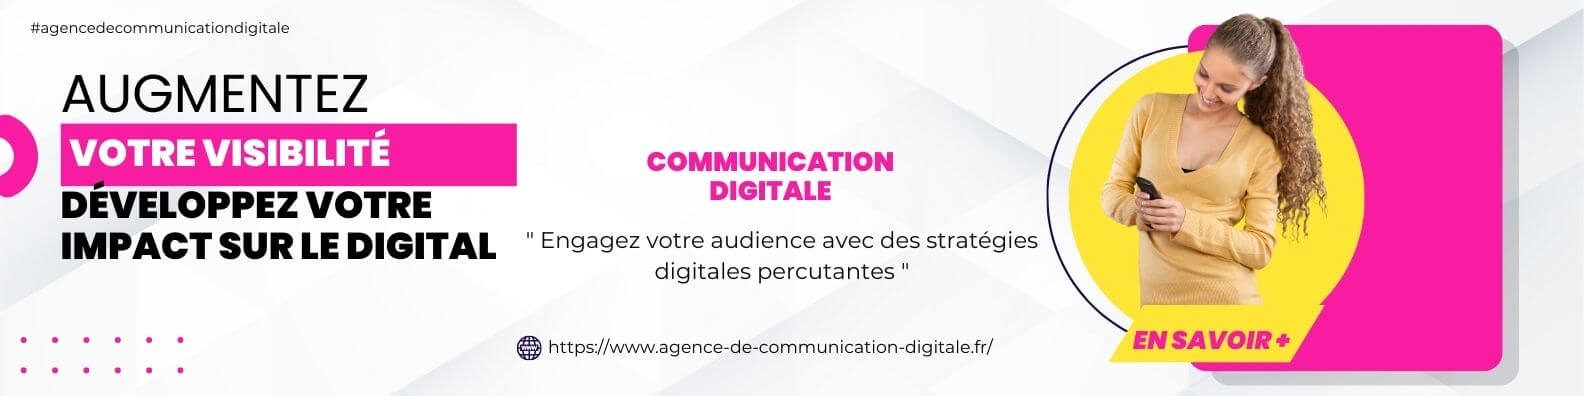 banner agence-de-communication-digitale.fr (3) (1)